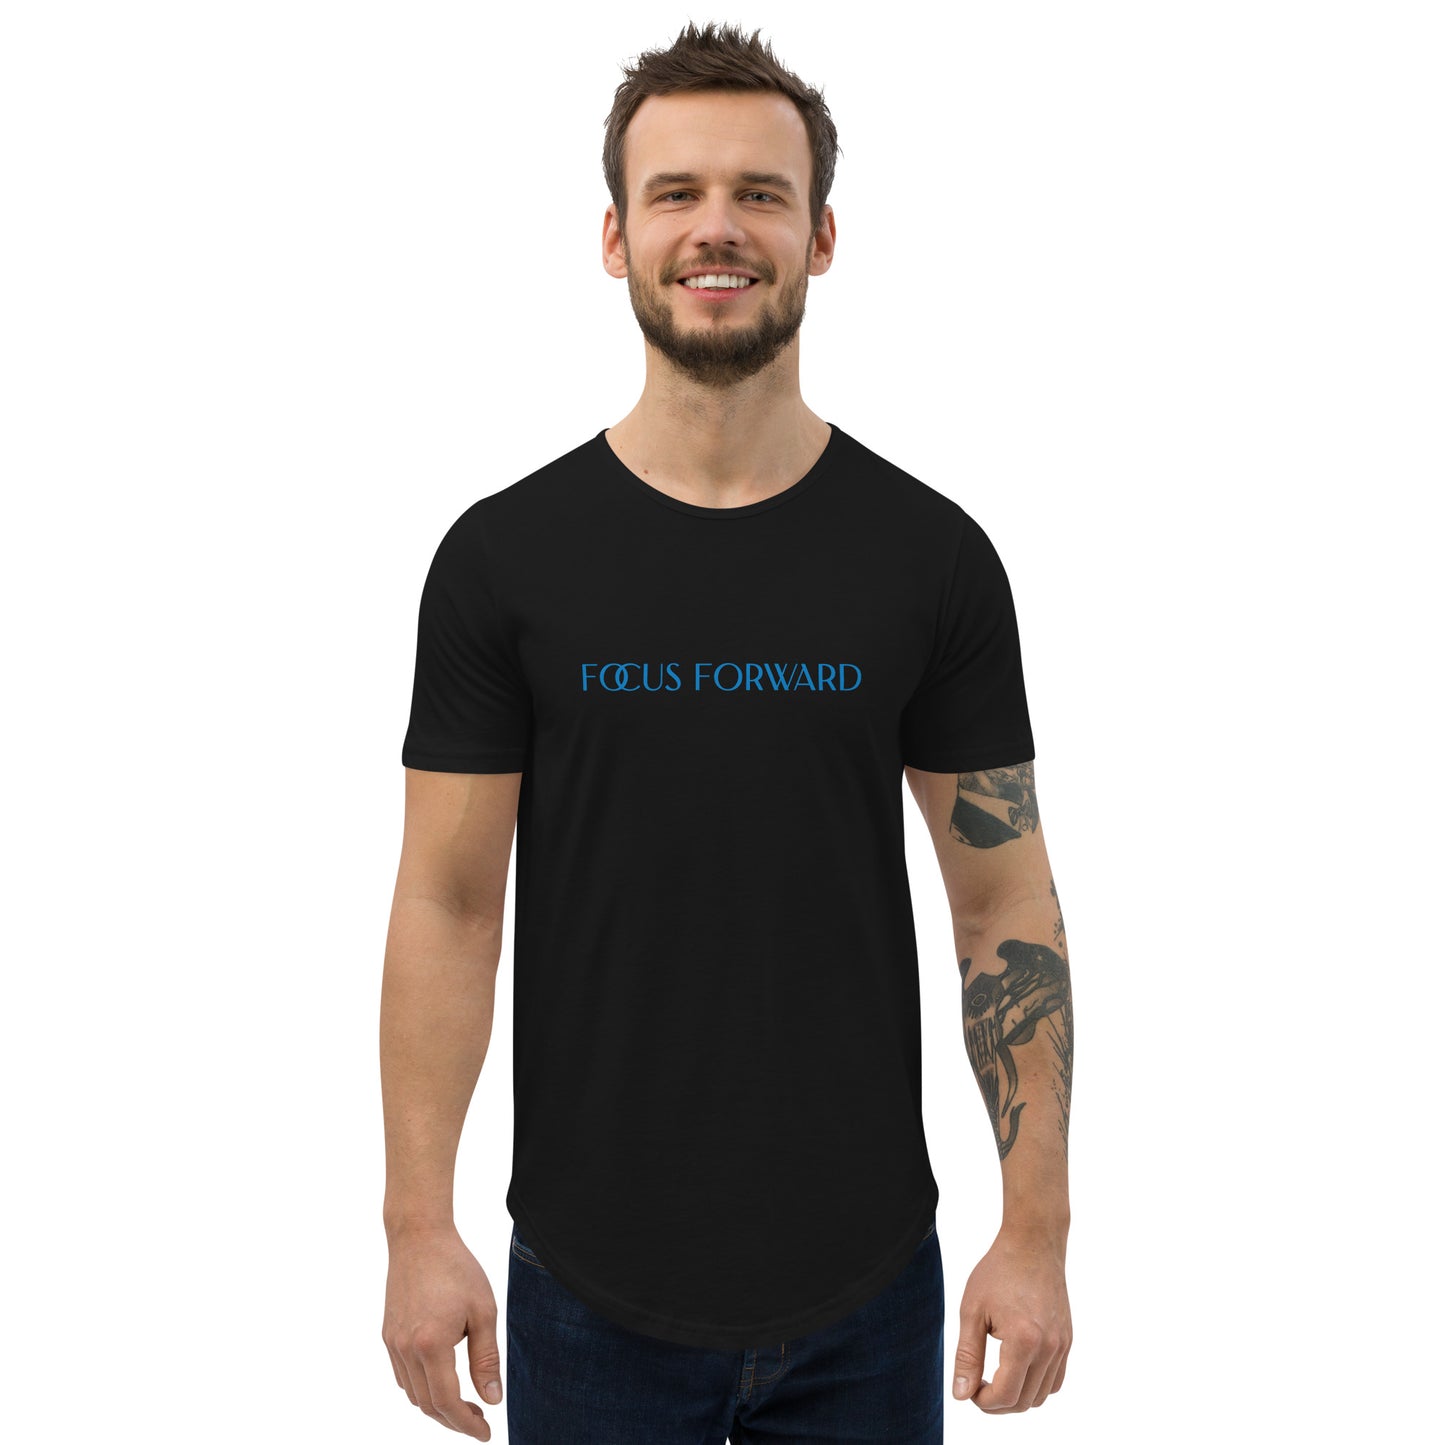 New Focus Forward Men's Curved Hem T-Shirt